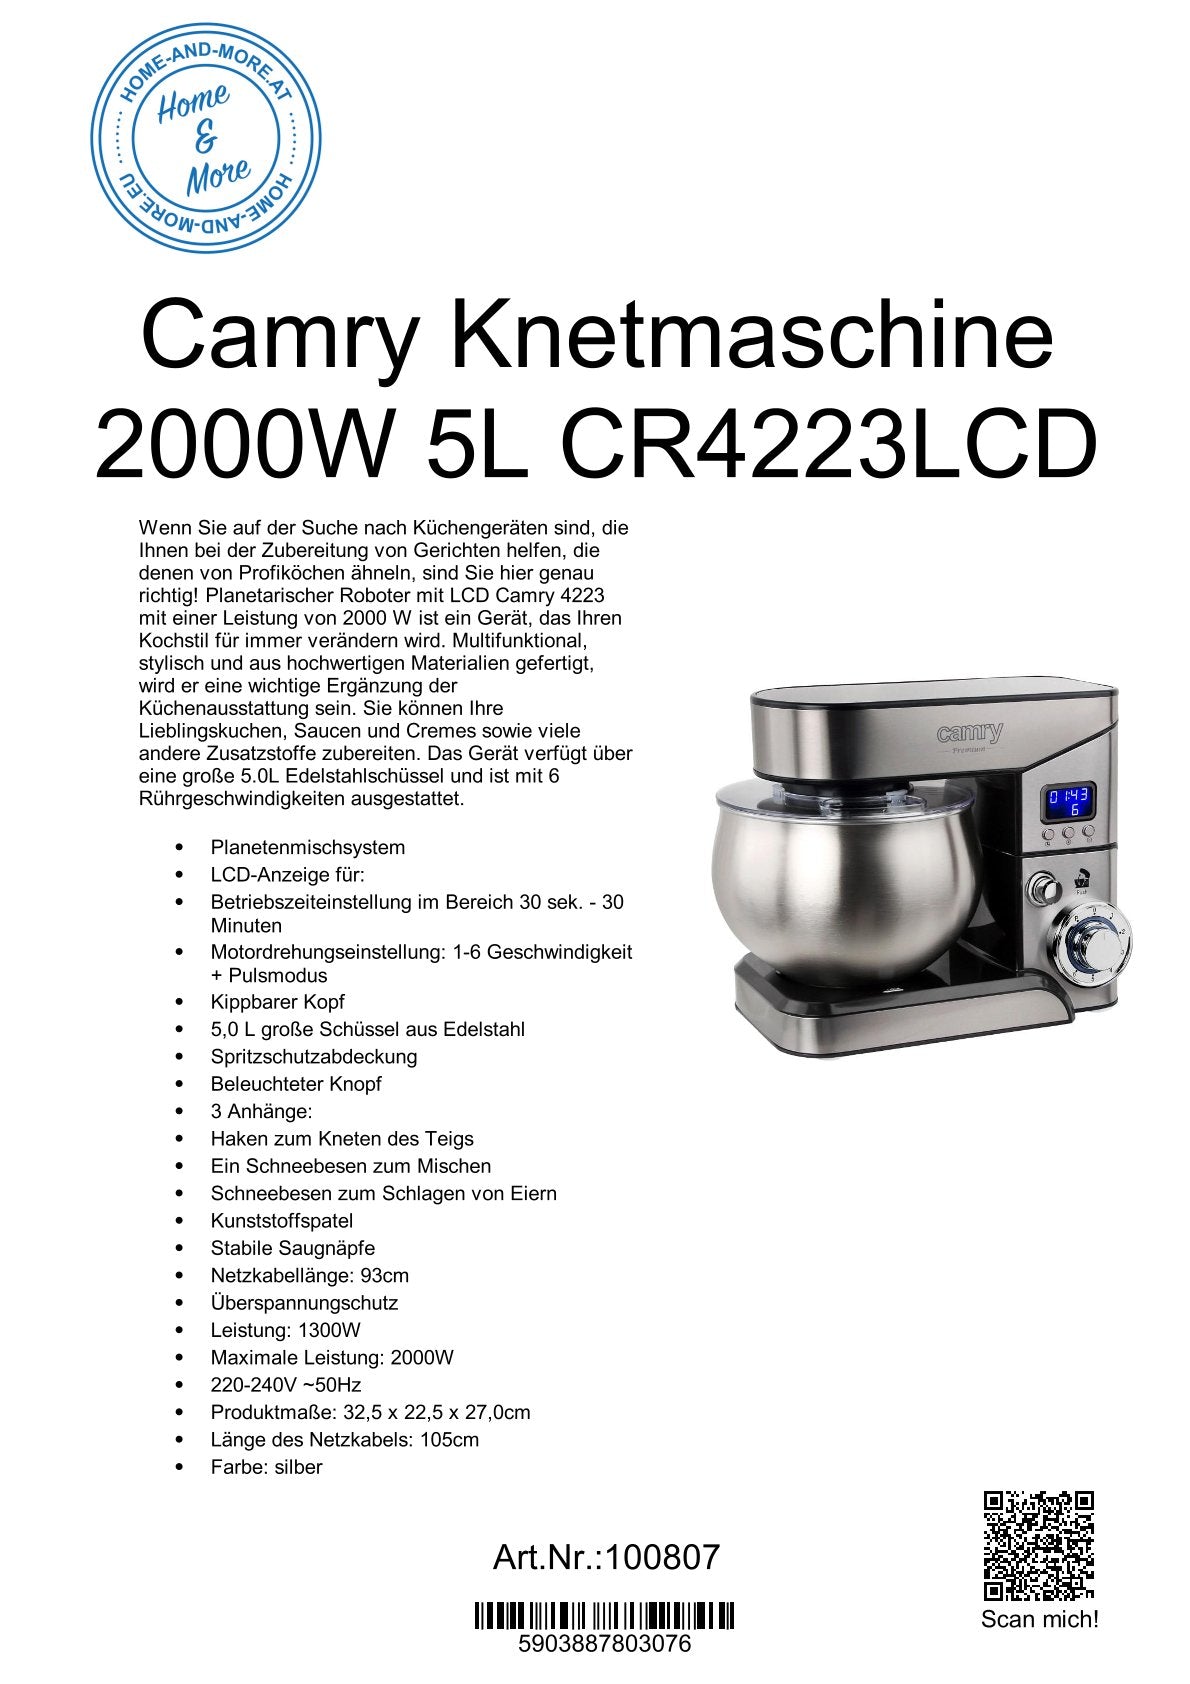 Camry Knetmaschine 2000W 5L CR4223LCD